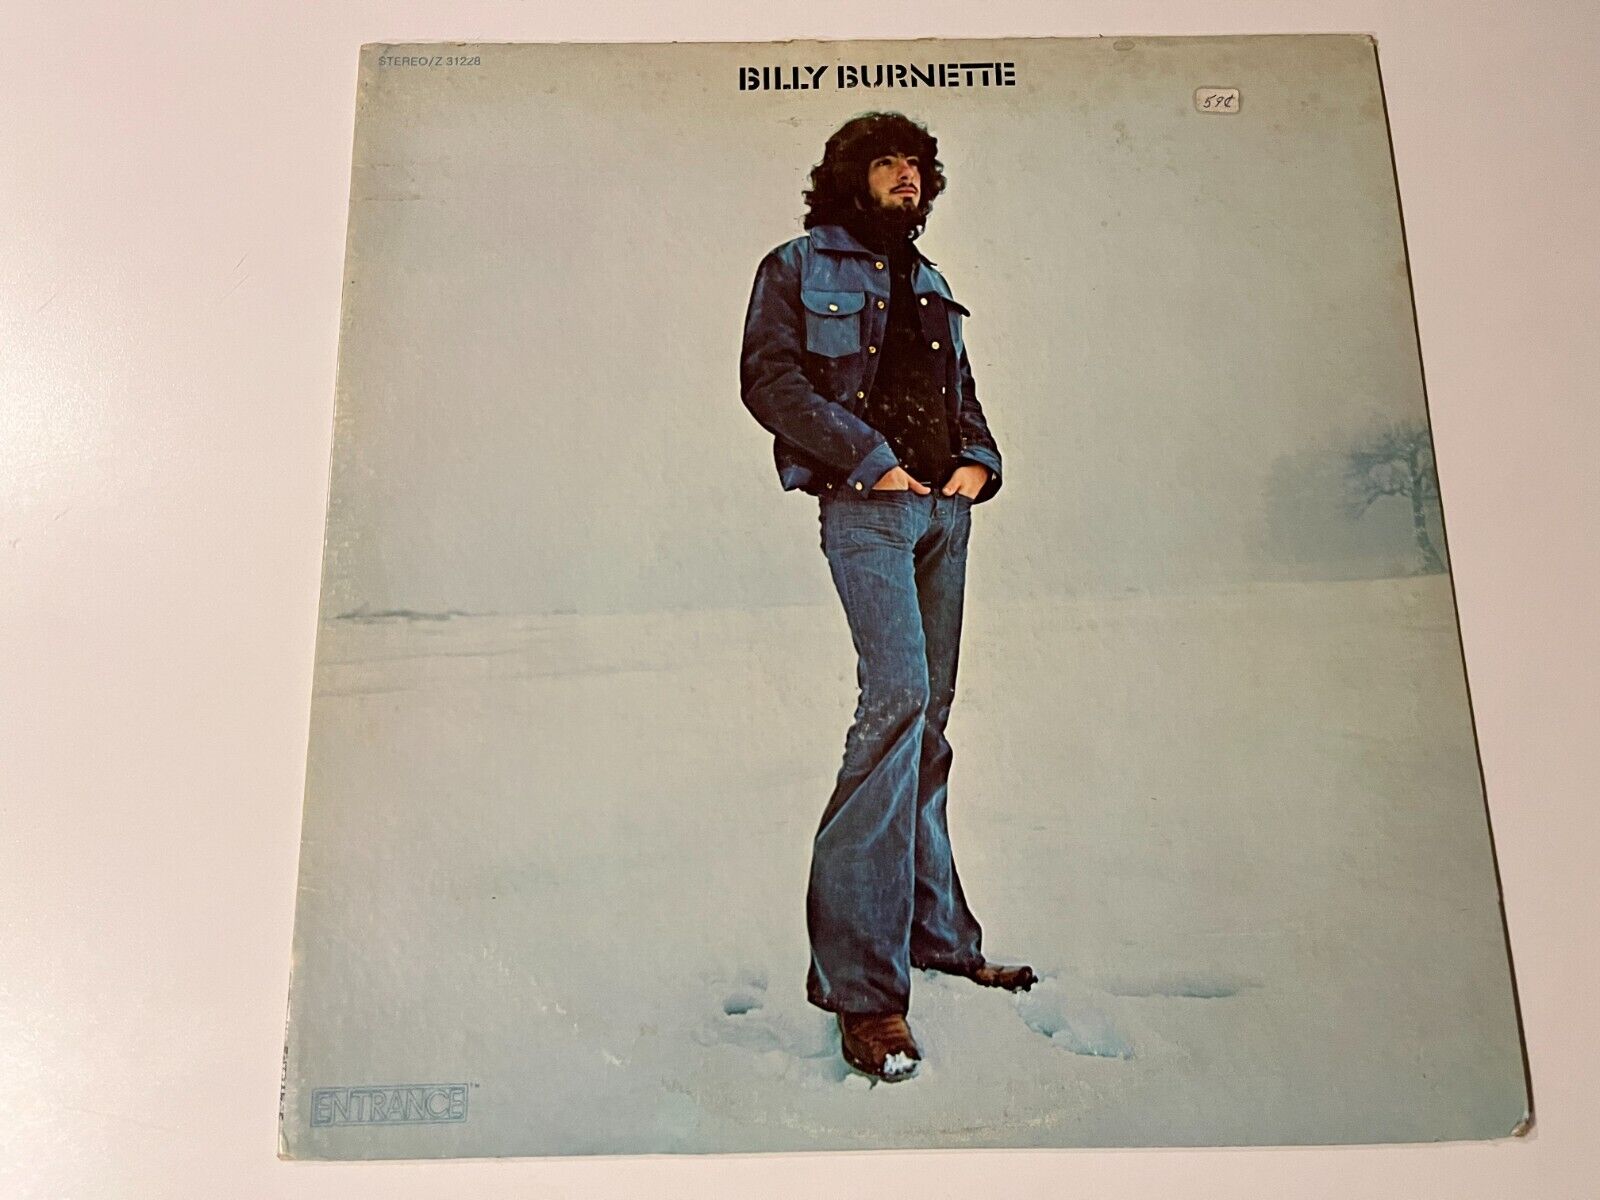 BILLY BURNETTE Self-Titled S/T  1972 Entrance LP -- VG+/G+